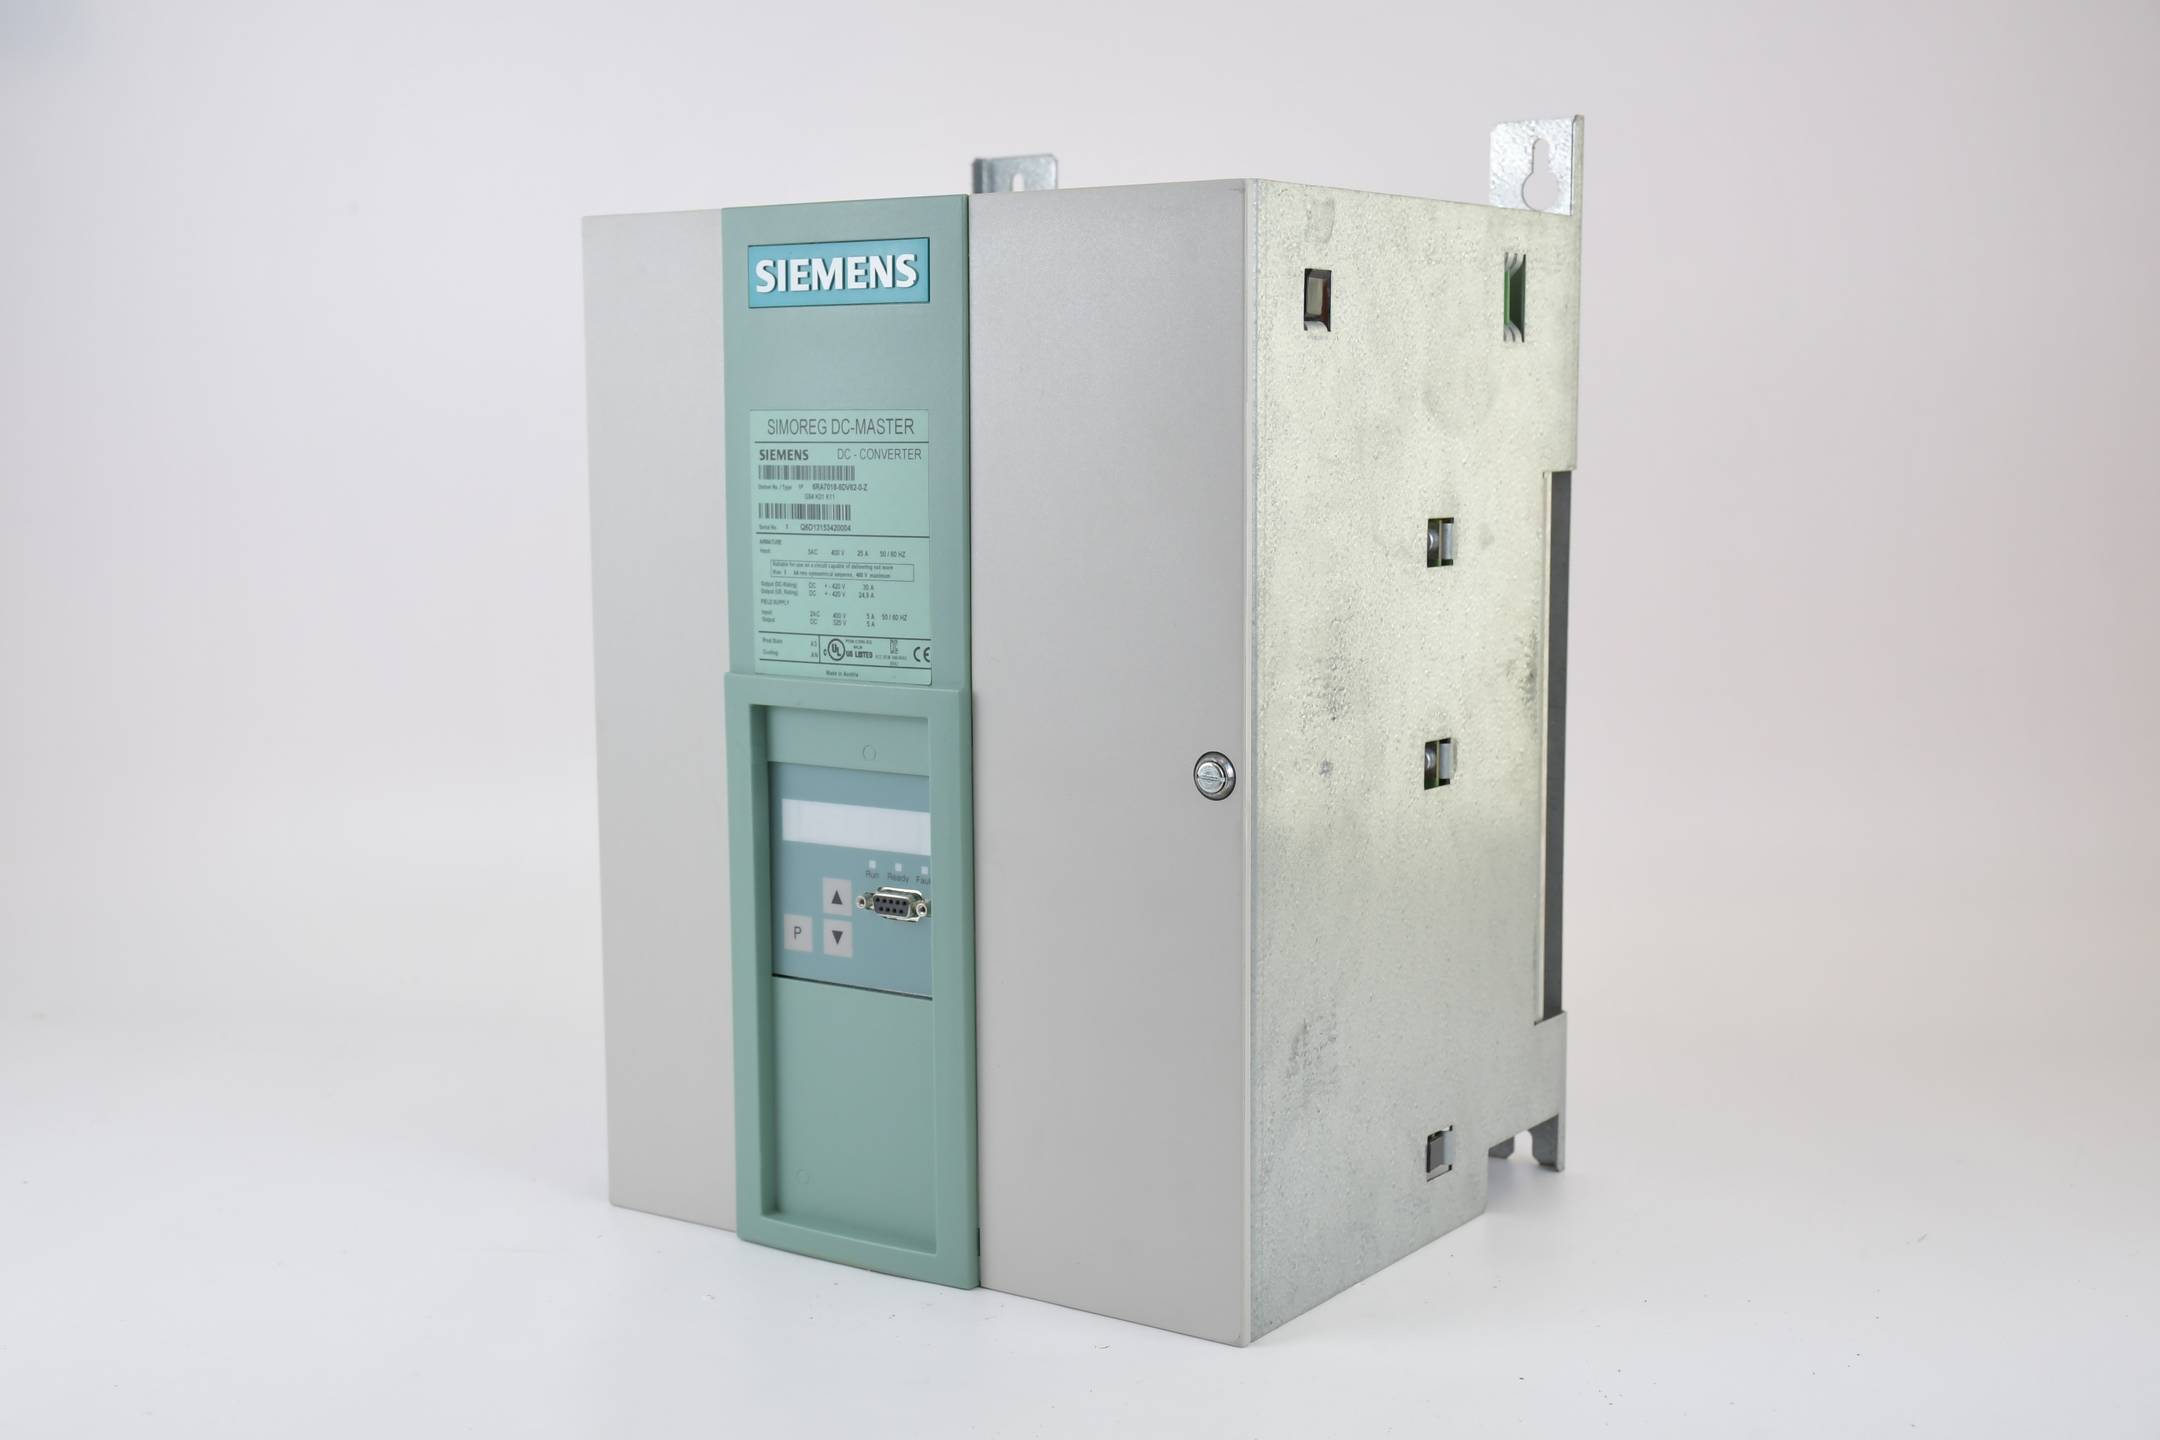 Siemens simoreg DC Master 6RA7018-6DV62-0-Z ( 6RA7 018-6DV62-0 ) inkl. Z-Option